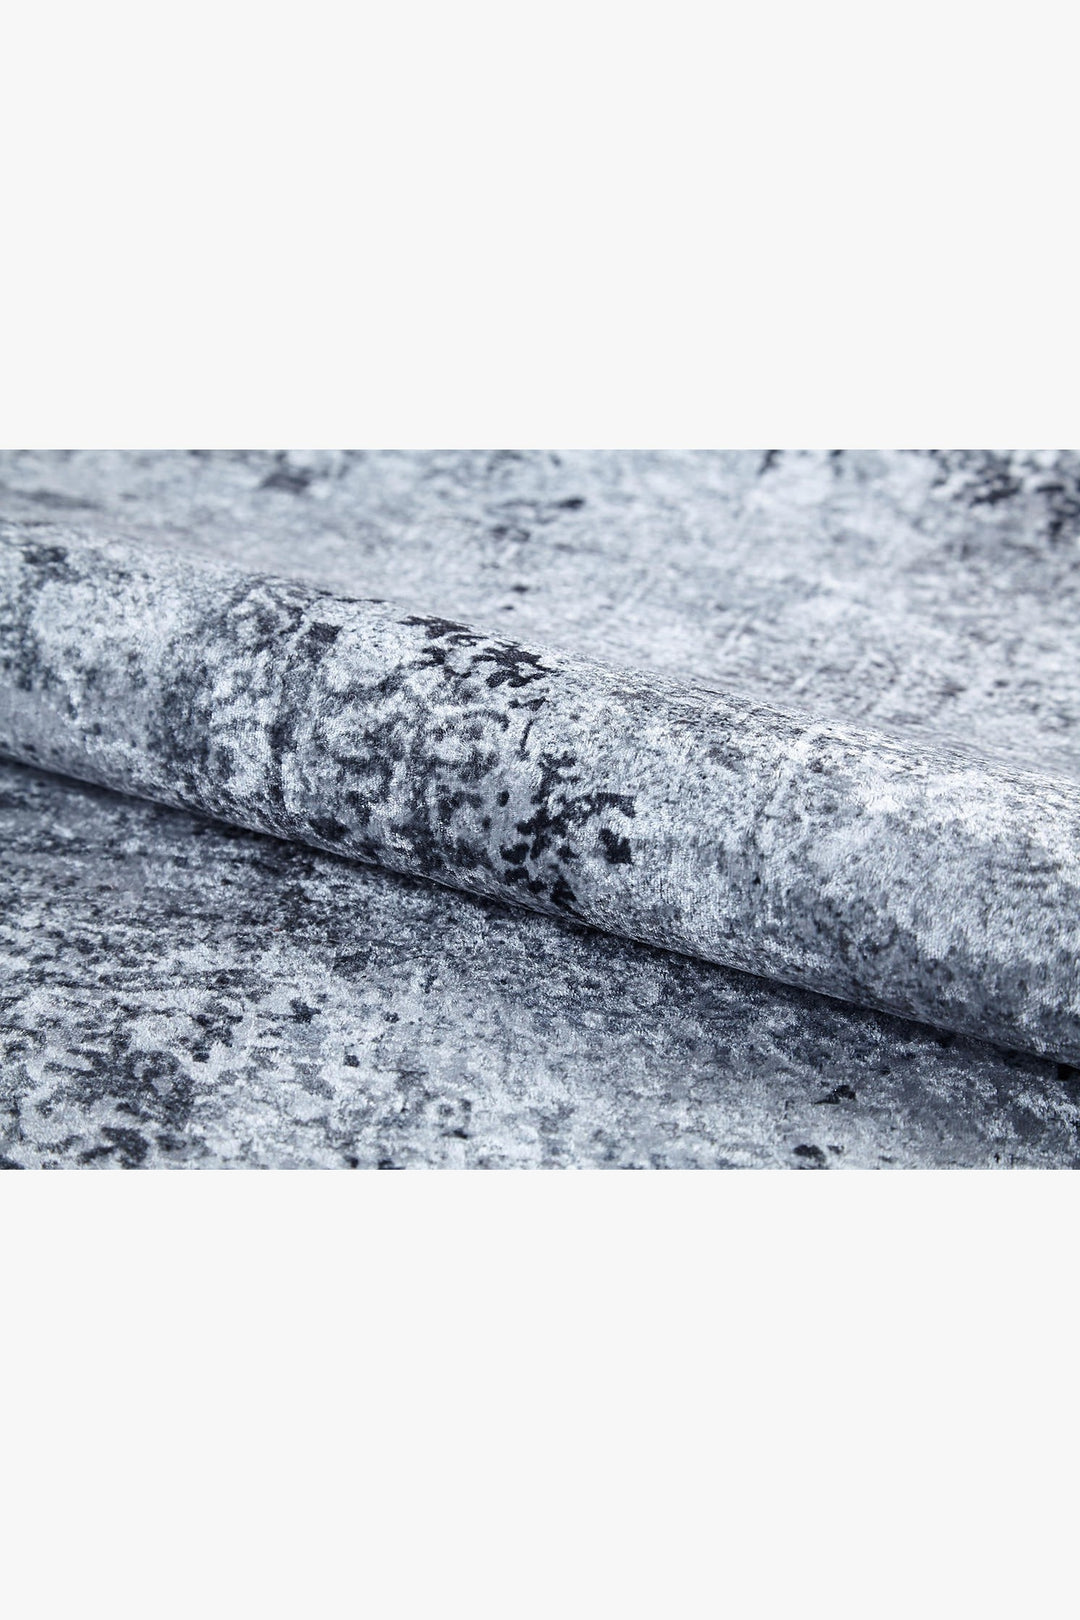 machine-washable-area-rug-Erased-Medallion-Modern-Collection-Gray-Anthracite-JR1829